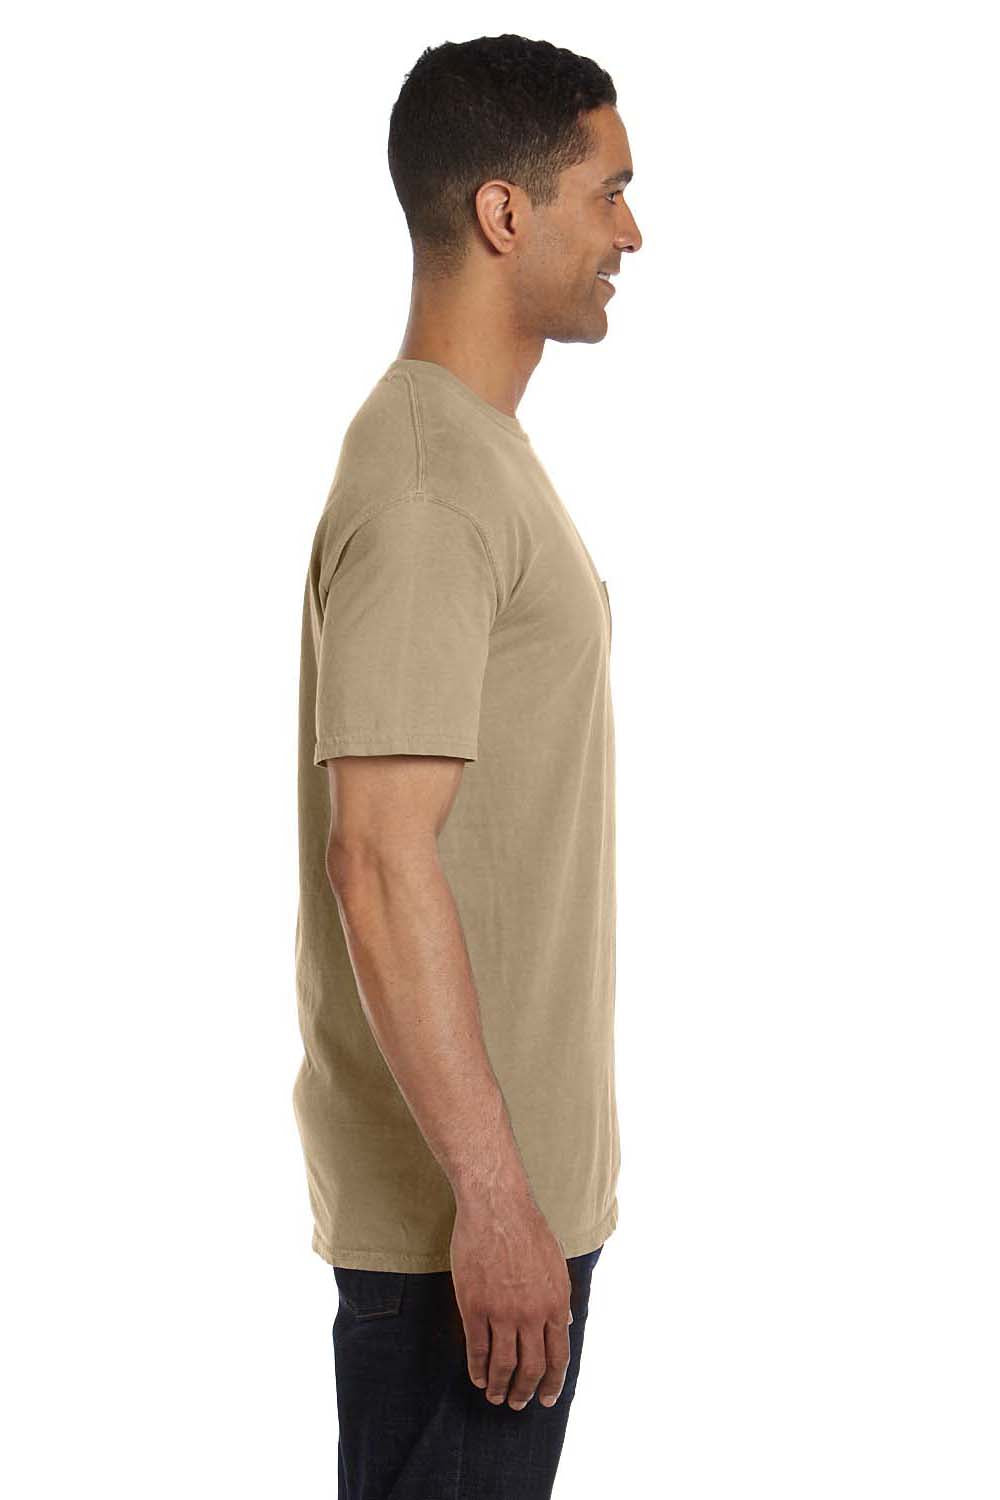 Comfort Colors 6030CC Mens Short Sleeve Crewneck T-Shirt w/ Pocket Khaki Brown Side